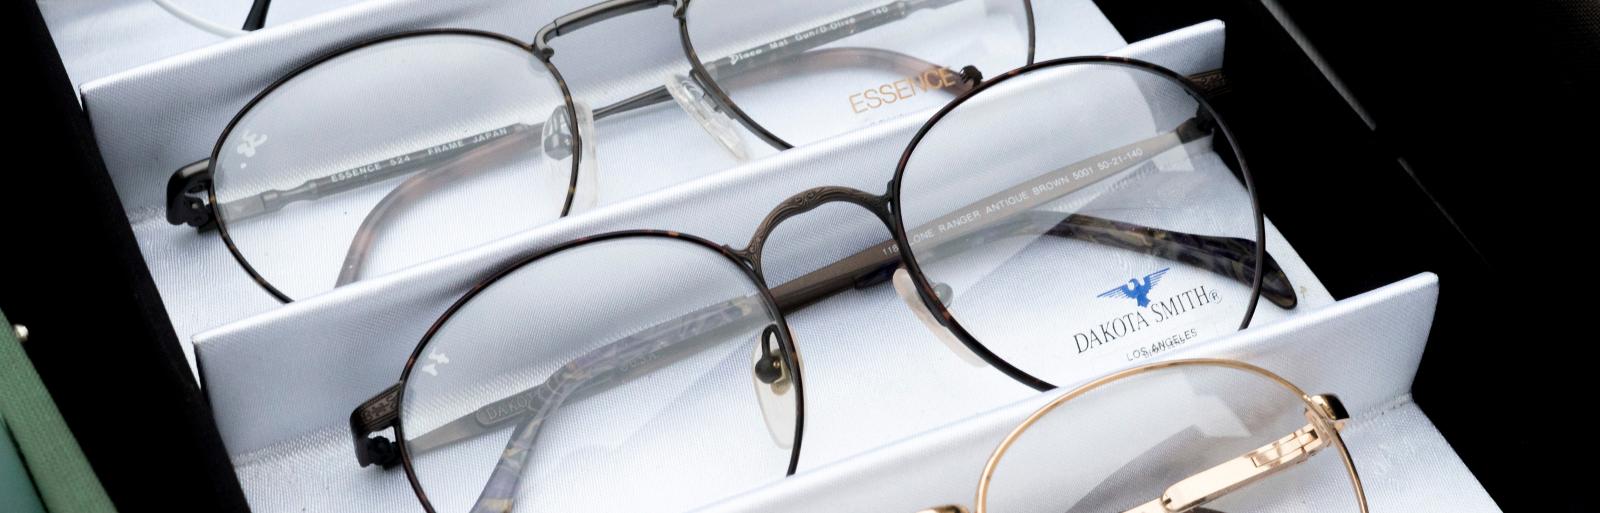 pairs of glasses